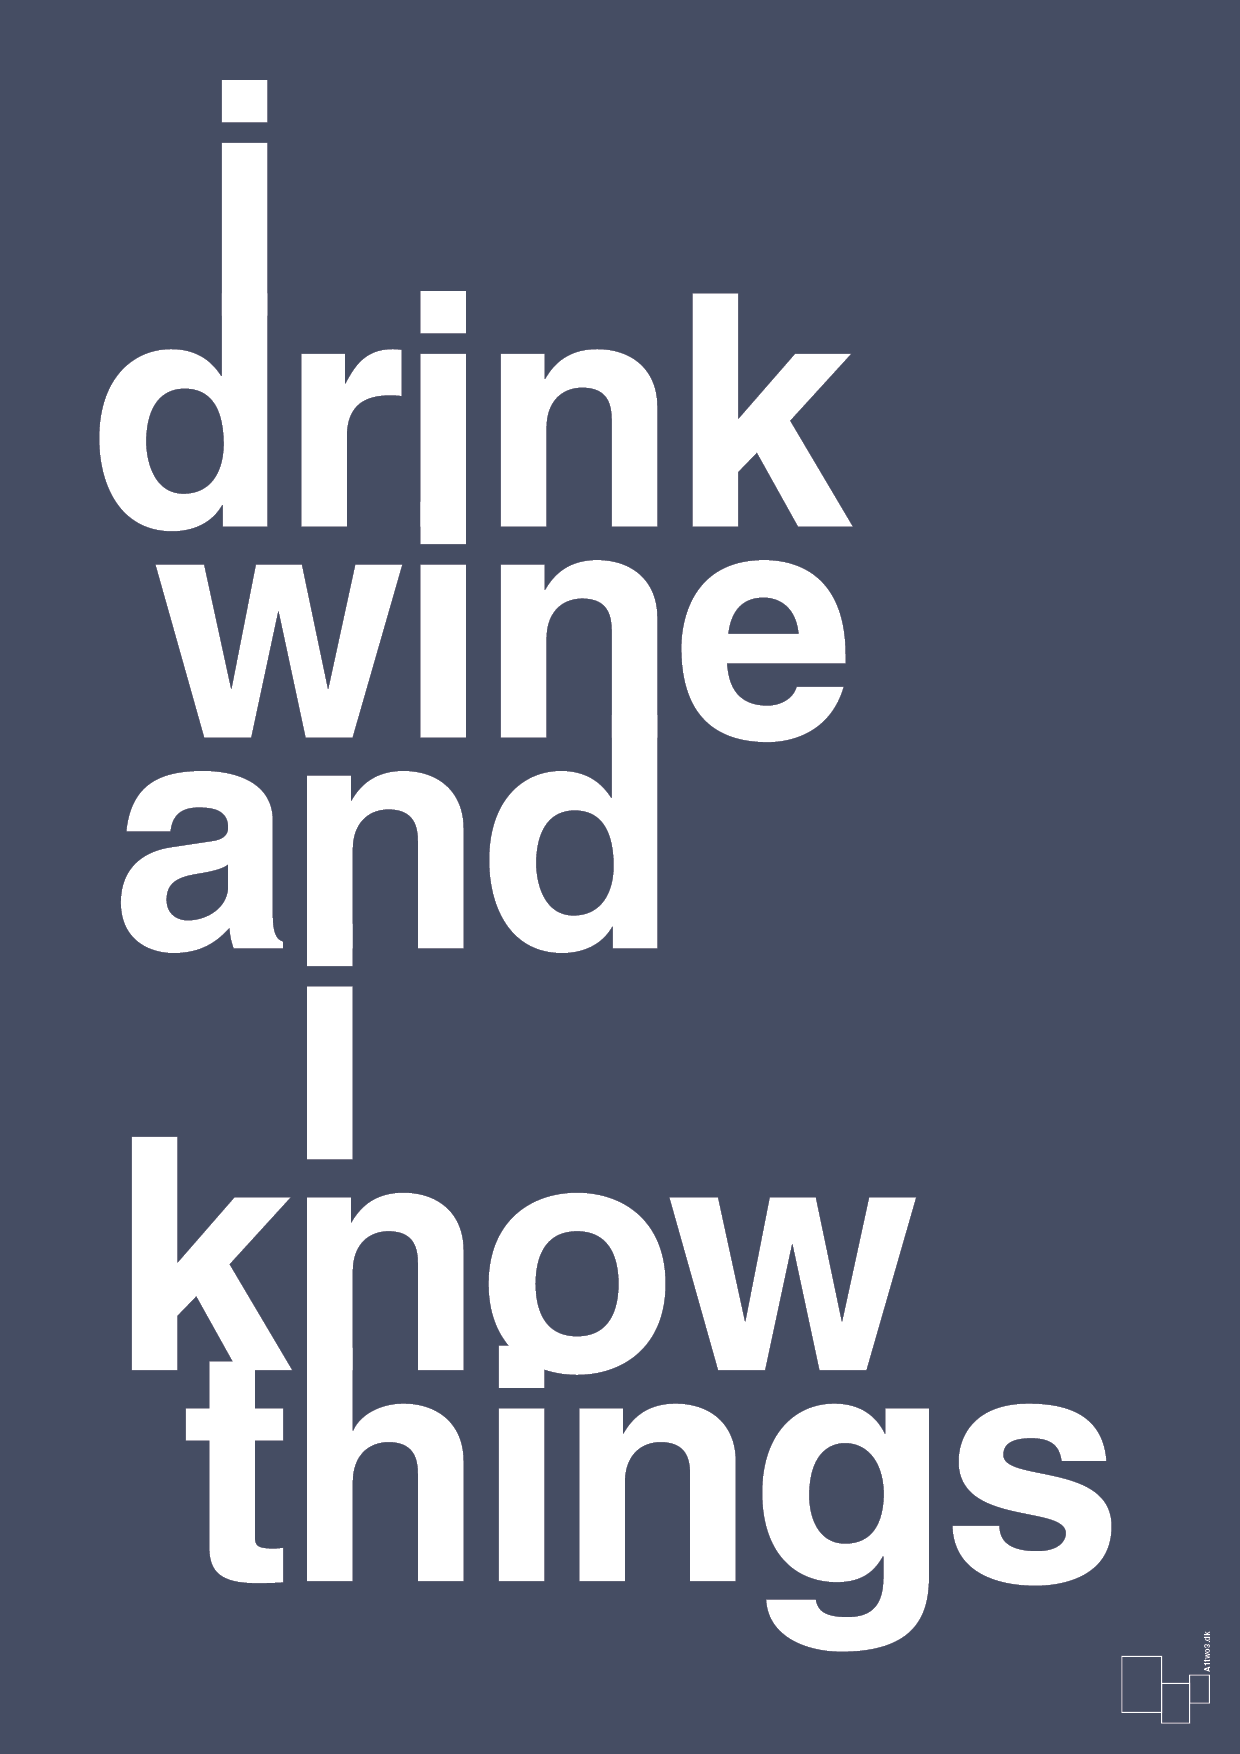 i drink wine and i know things - Plakat med Ordsprog i Petrol